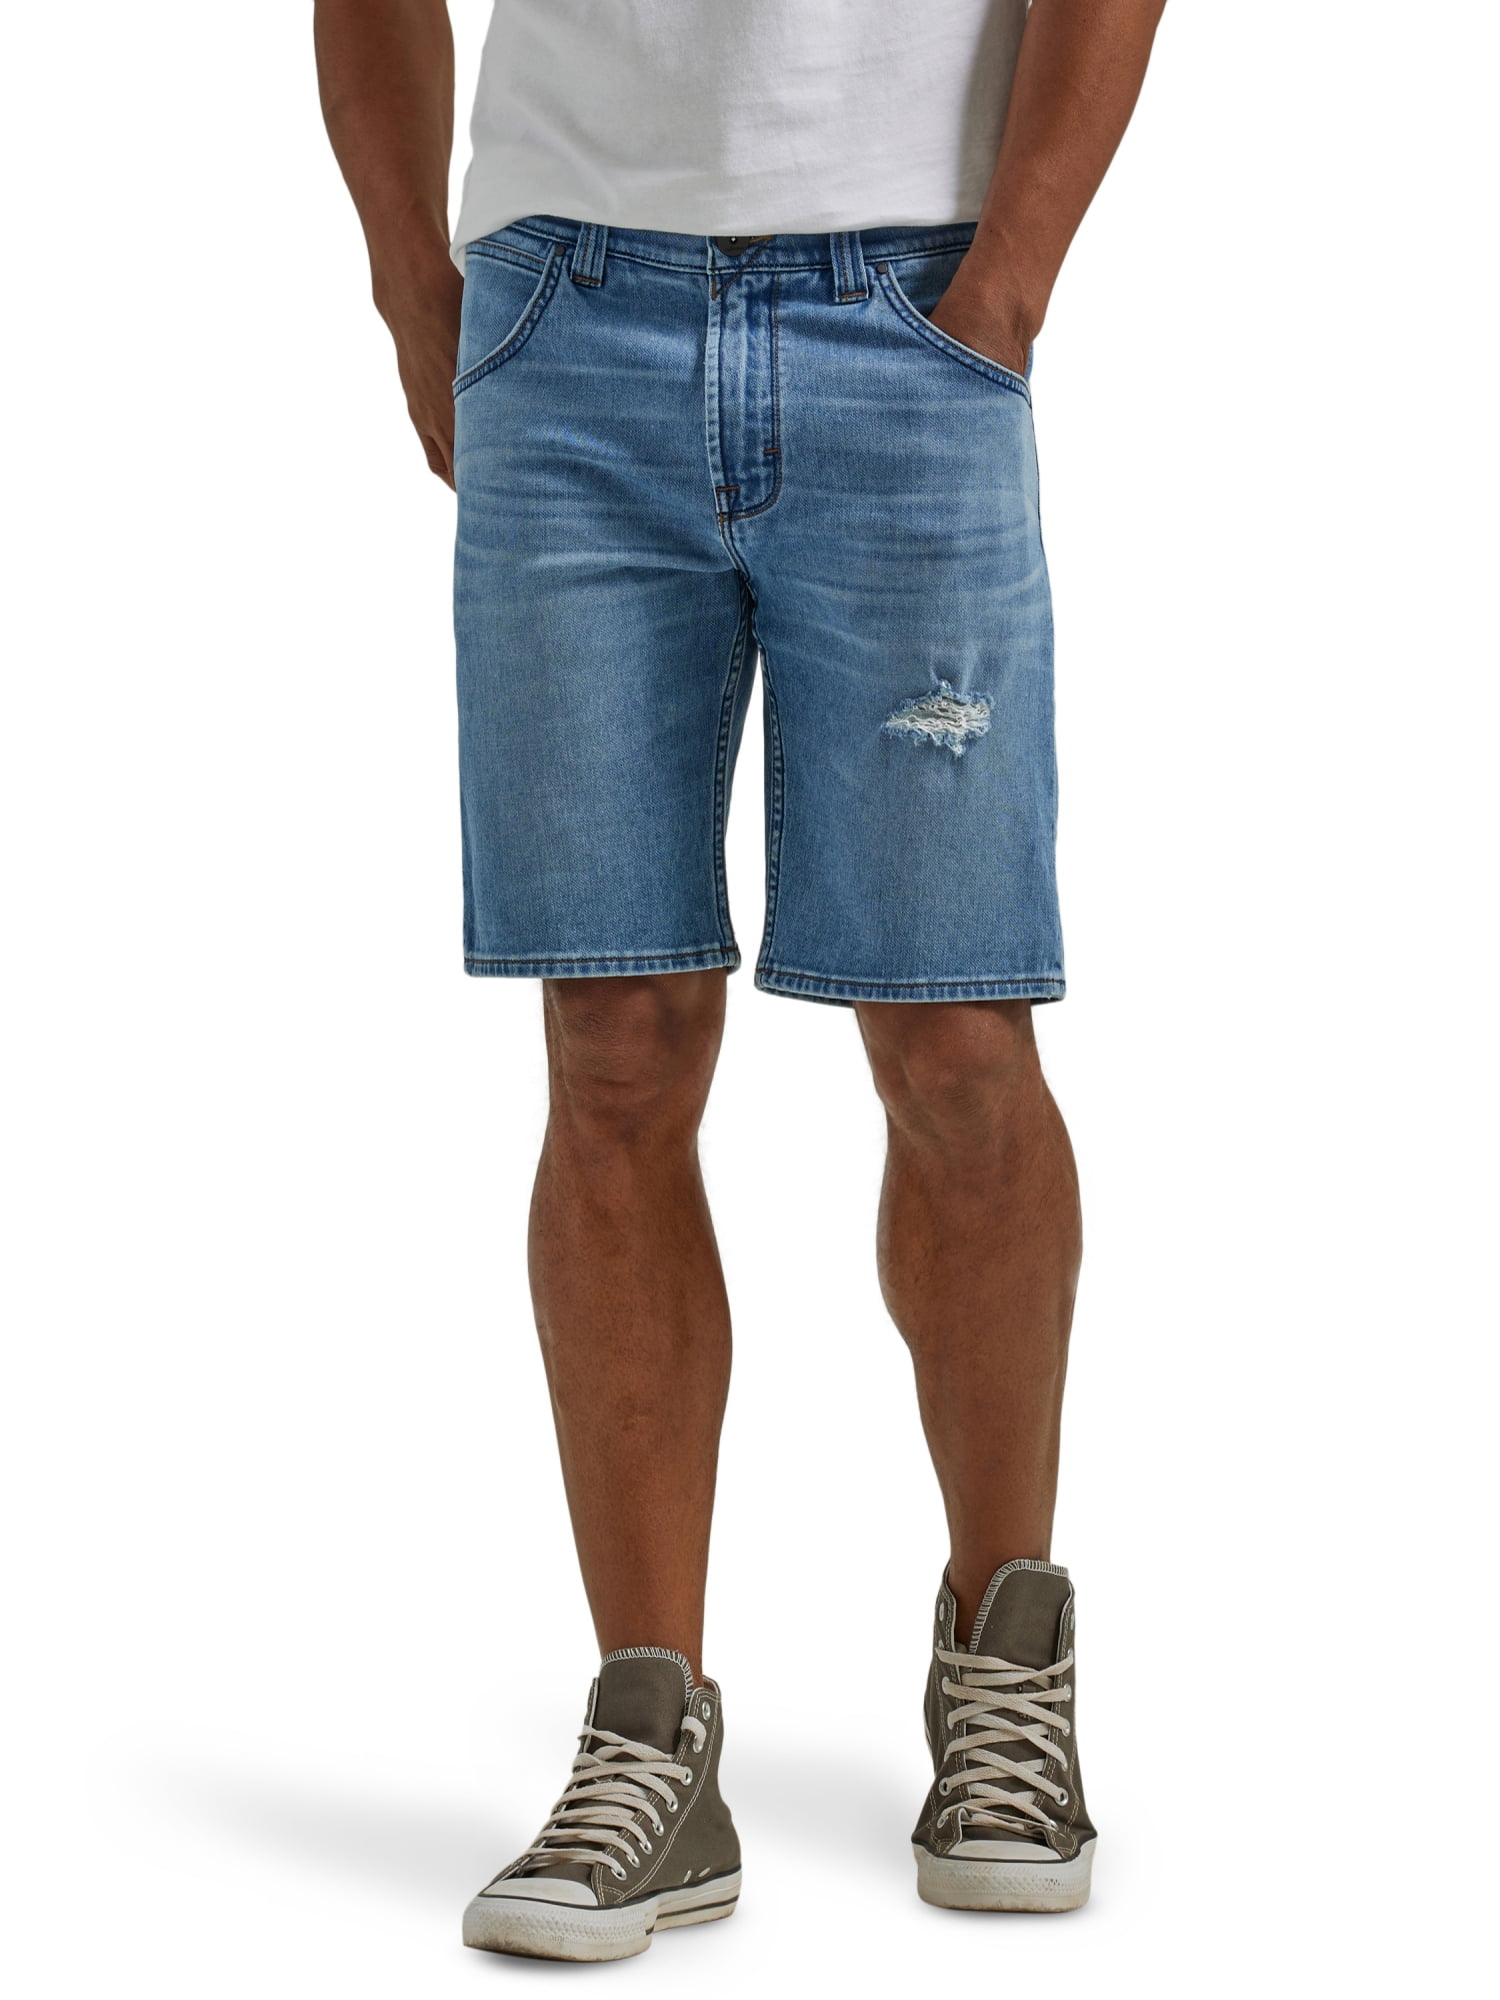 Wrangler Jean Shorts Mens size 46 Denim Dad Jorts Bermuda Style 100% Cotton